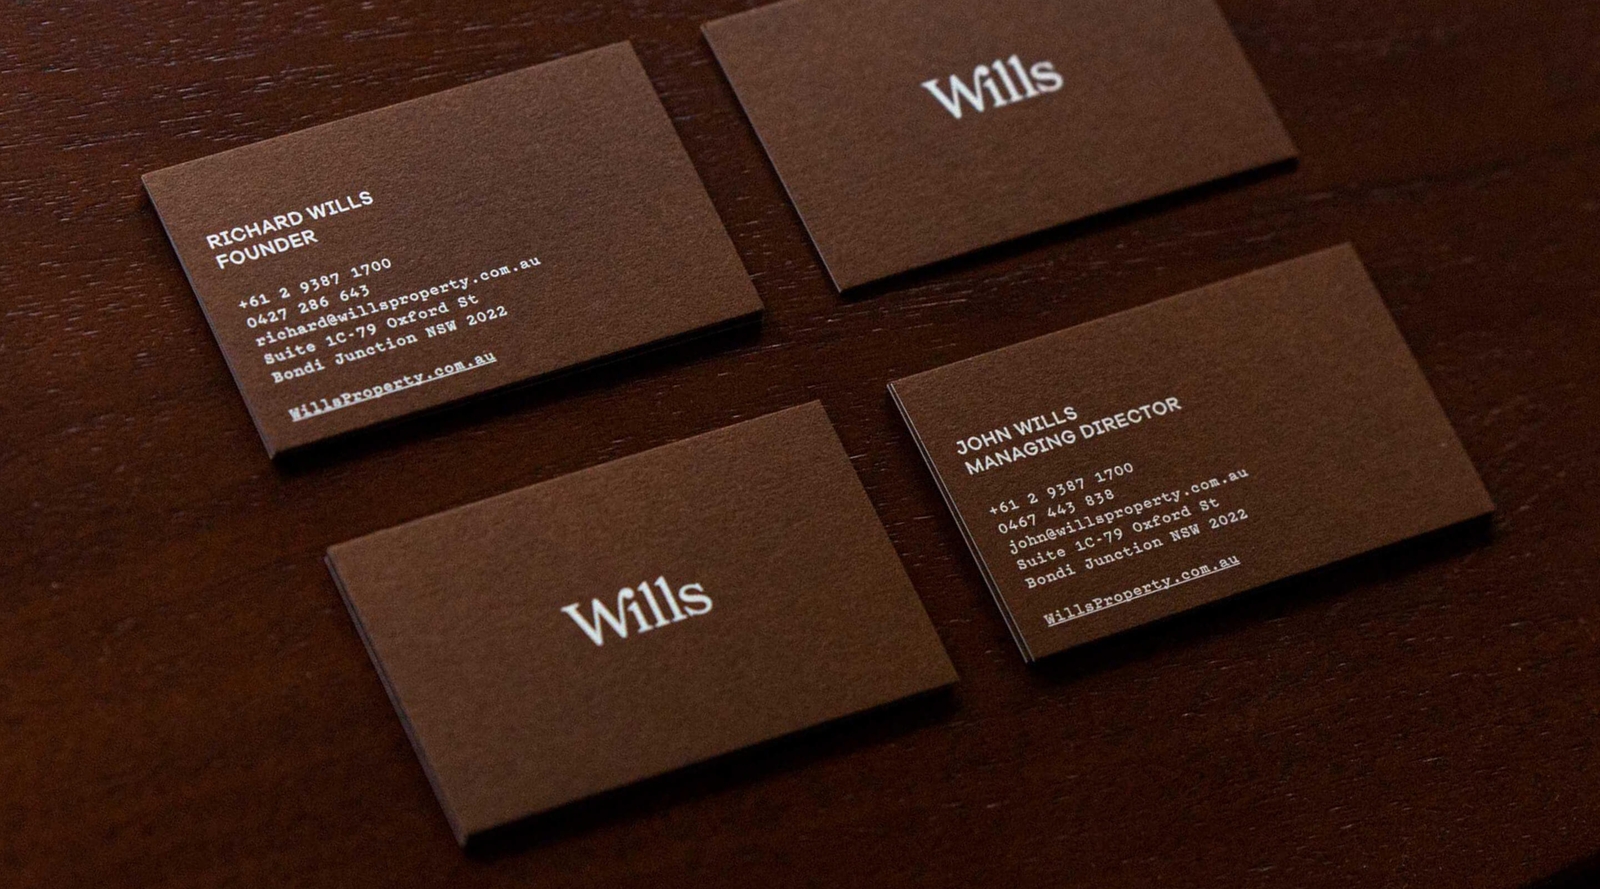 Wills Property - Real Estate Business Cards Design | Atollon - a design company